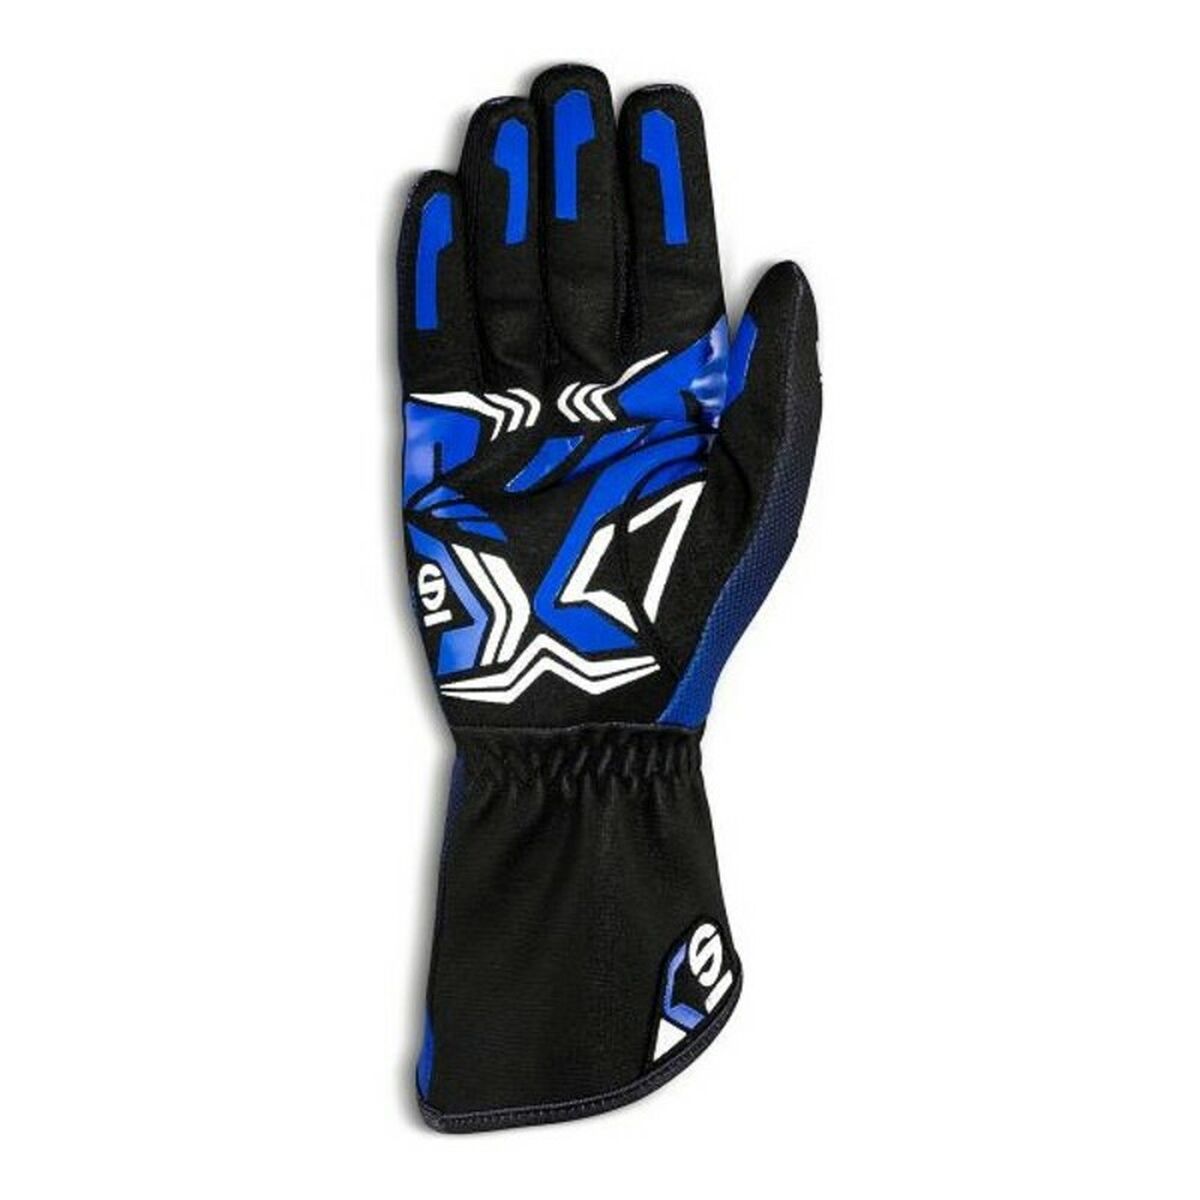 Men's Driving Gloves Sparco Rush 2020 Μπλε